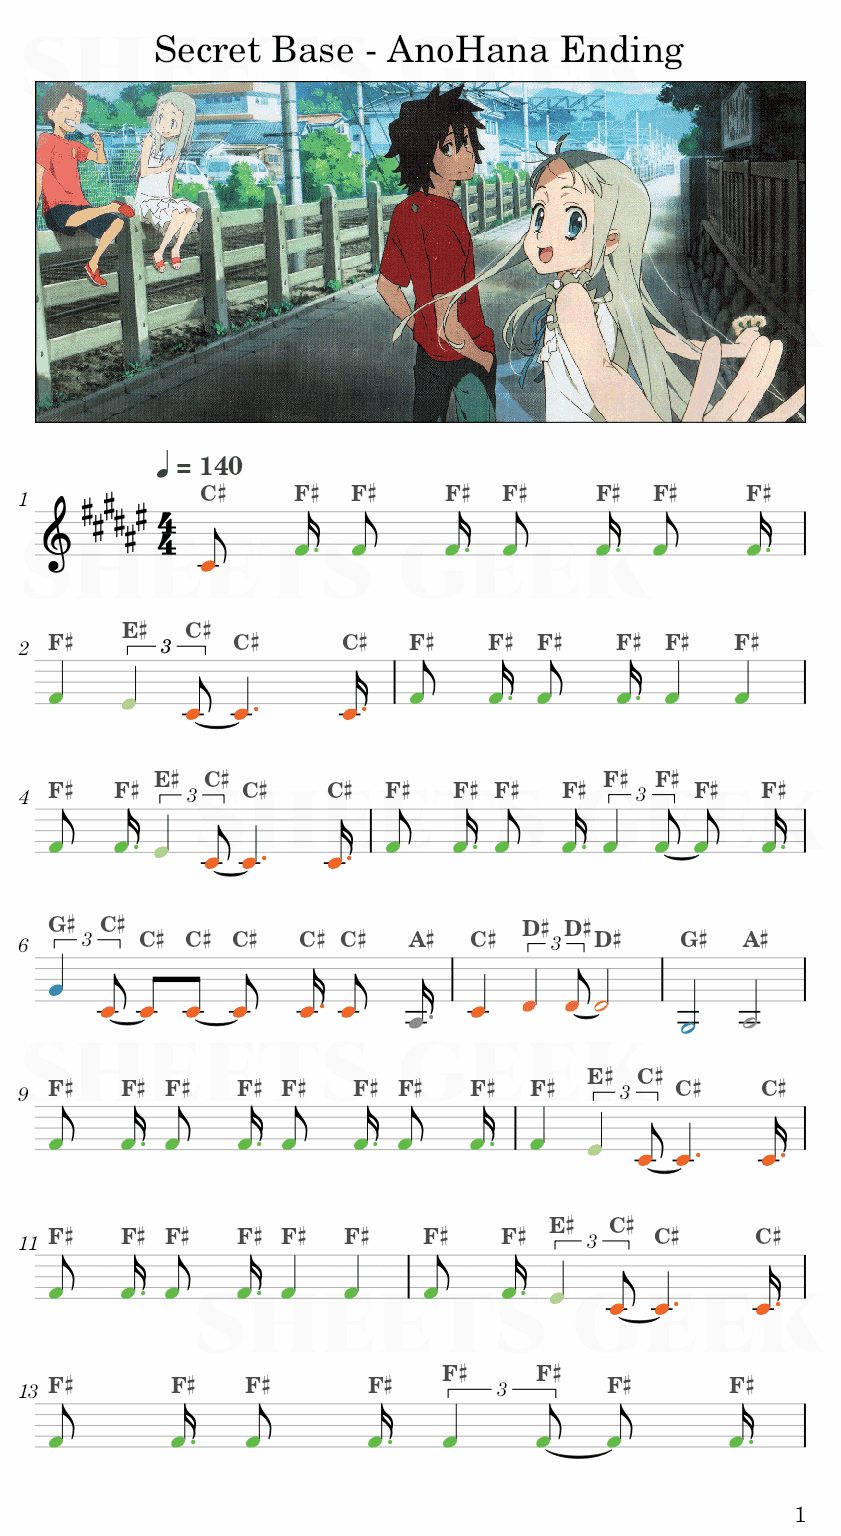 Secret Base / Kimi ga Kureta Mono - AnoHana Ending Easy Sheet Music Free for piano, keyboard, flute, violin, sax, cello page 1